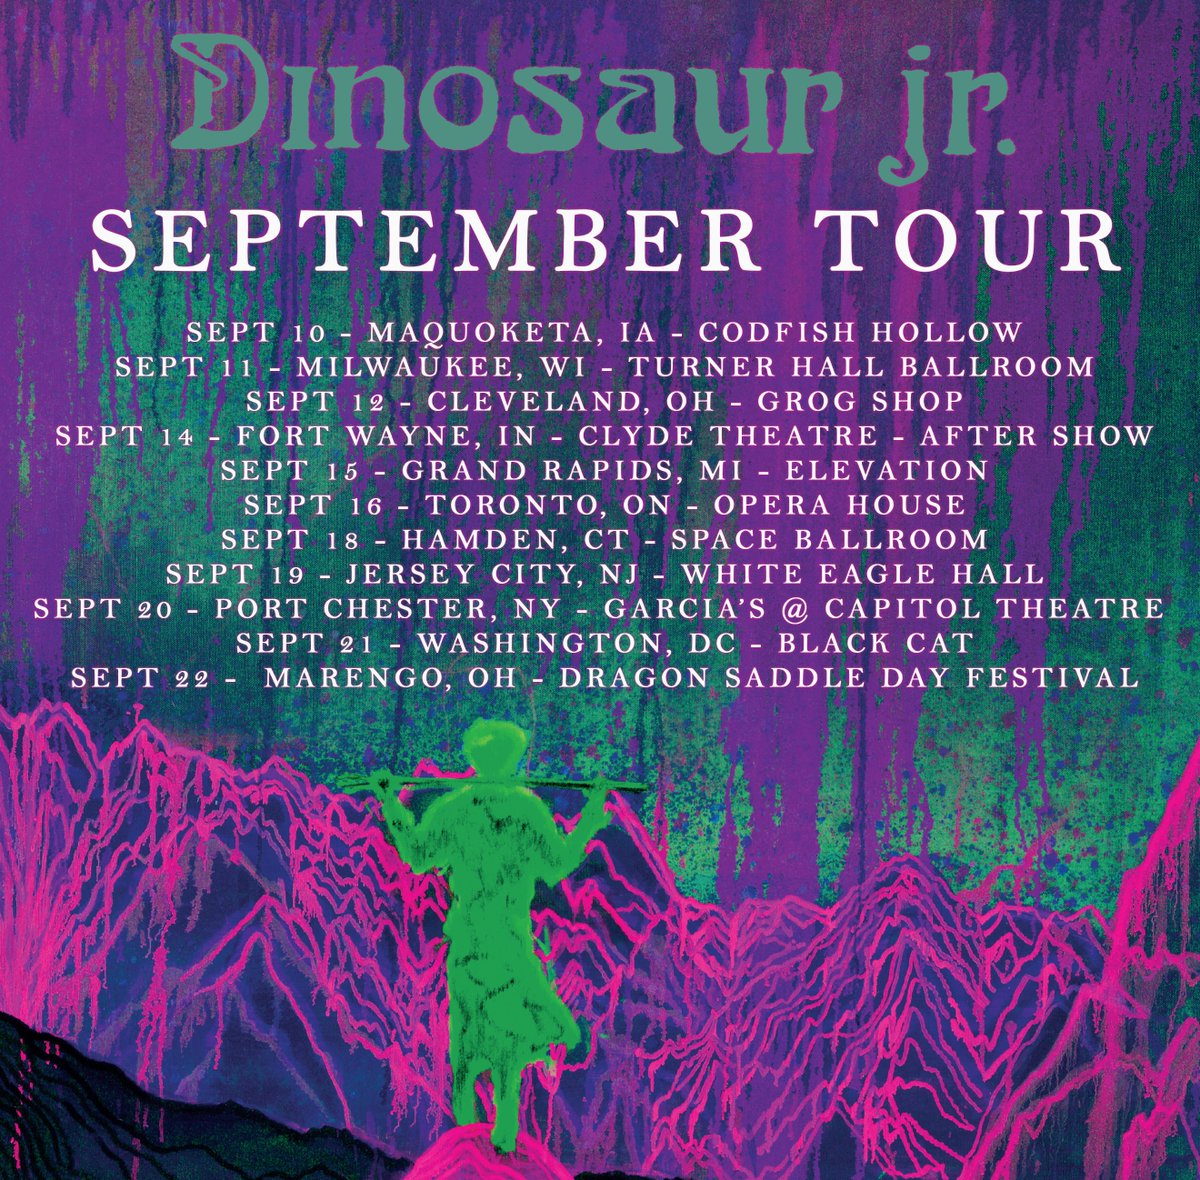 Dinosaur Jr. Schedule September Dates after Mastadon Tour Cancellation